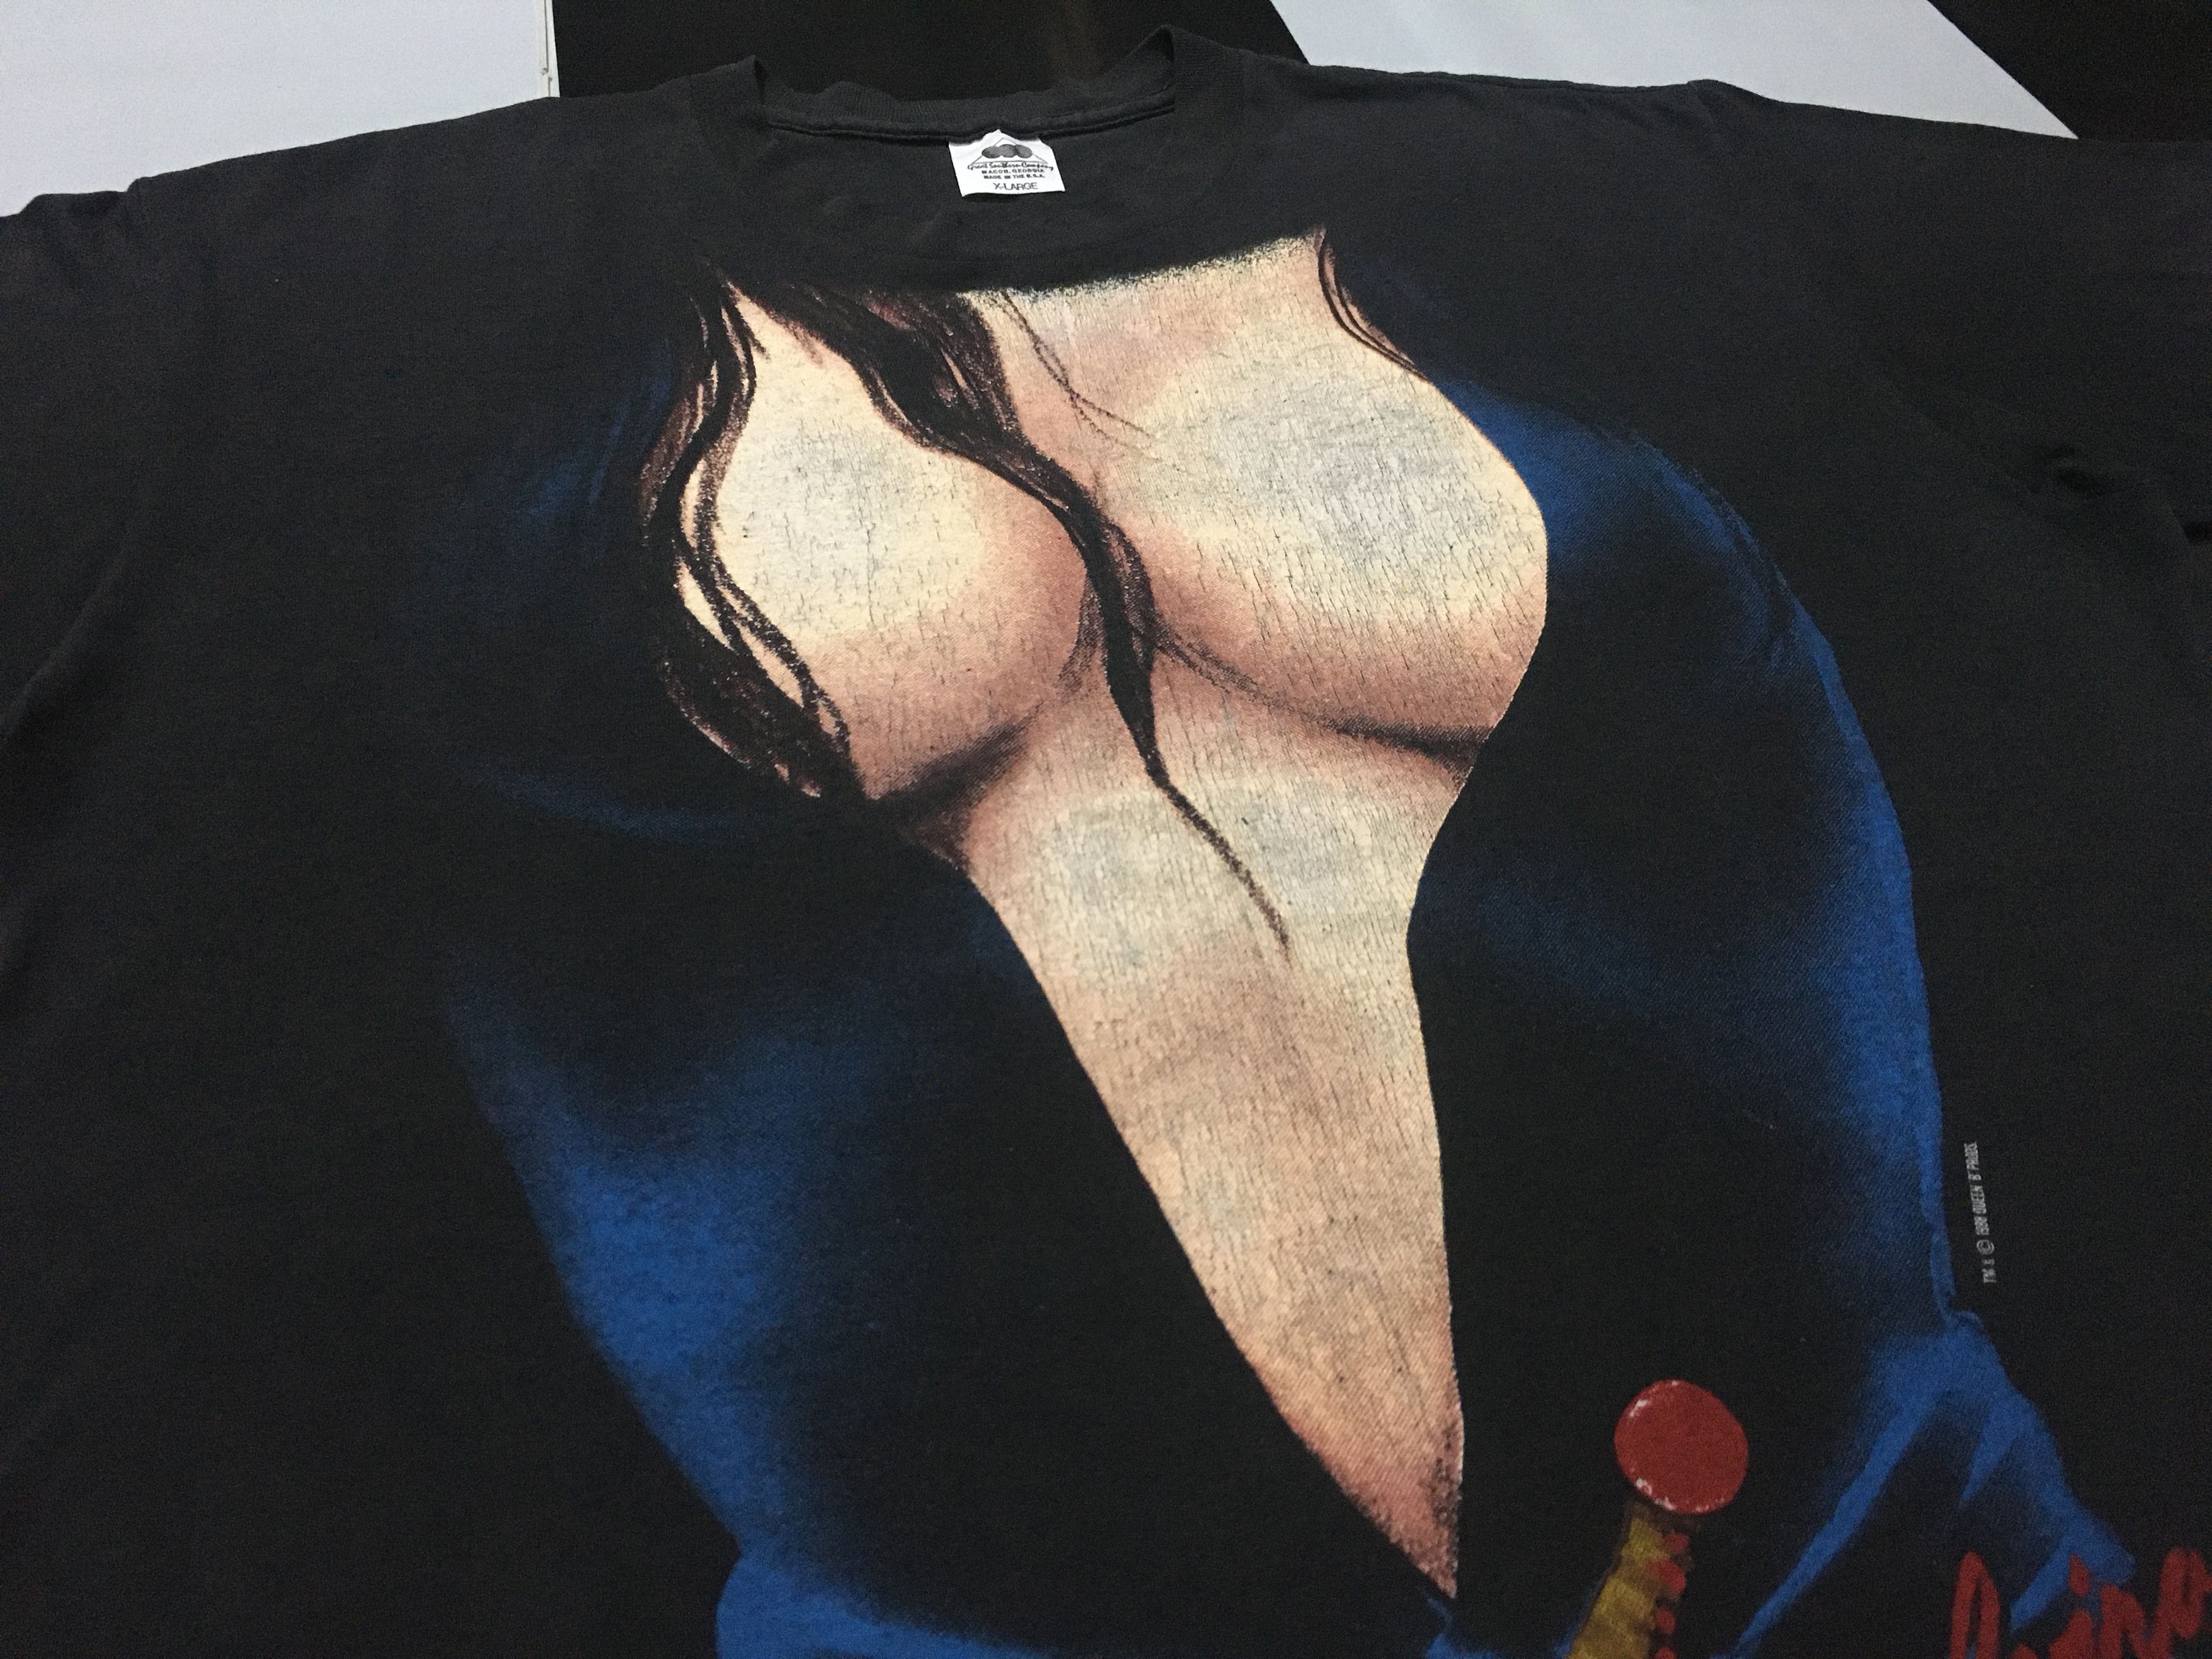 Vintage Vintage Elvira Shirt 1988 Mistress Of The Dark Full Printed Size US XL / EU 56 / 4 - 3 Thumbnail